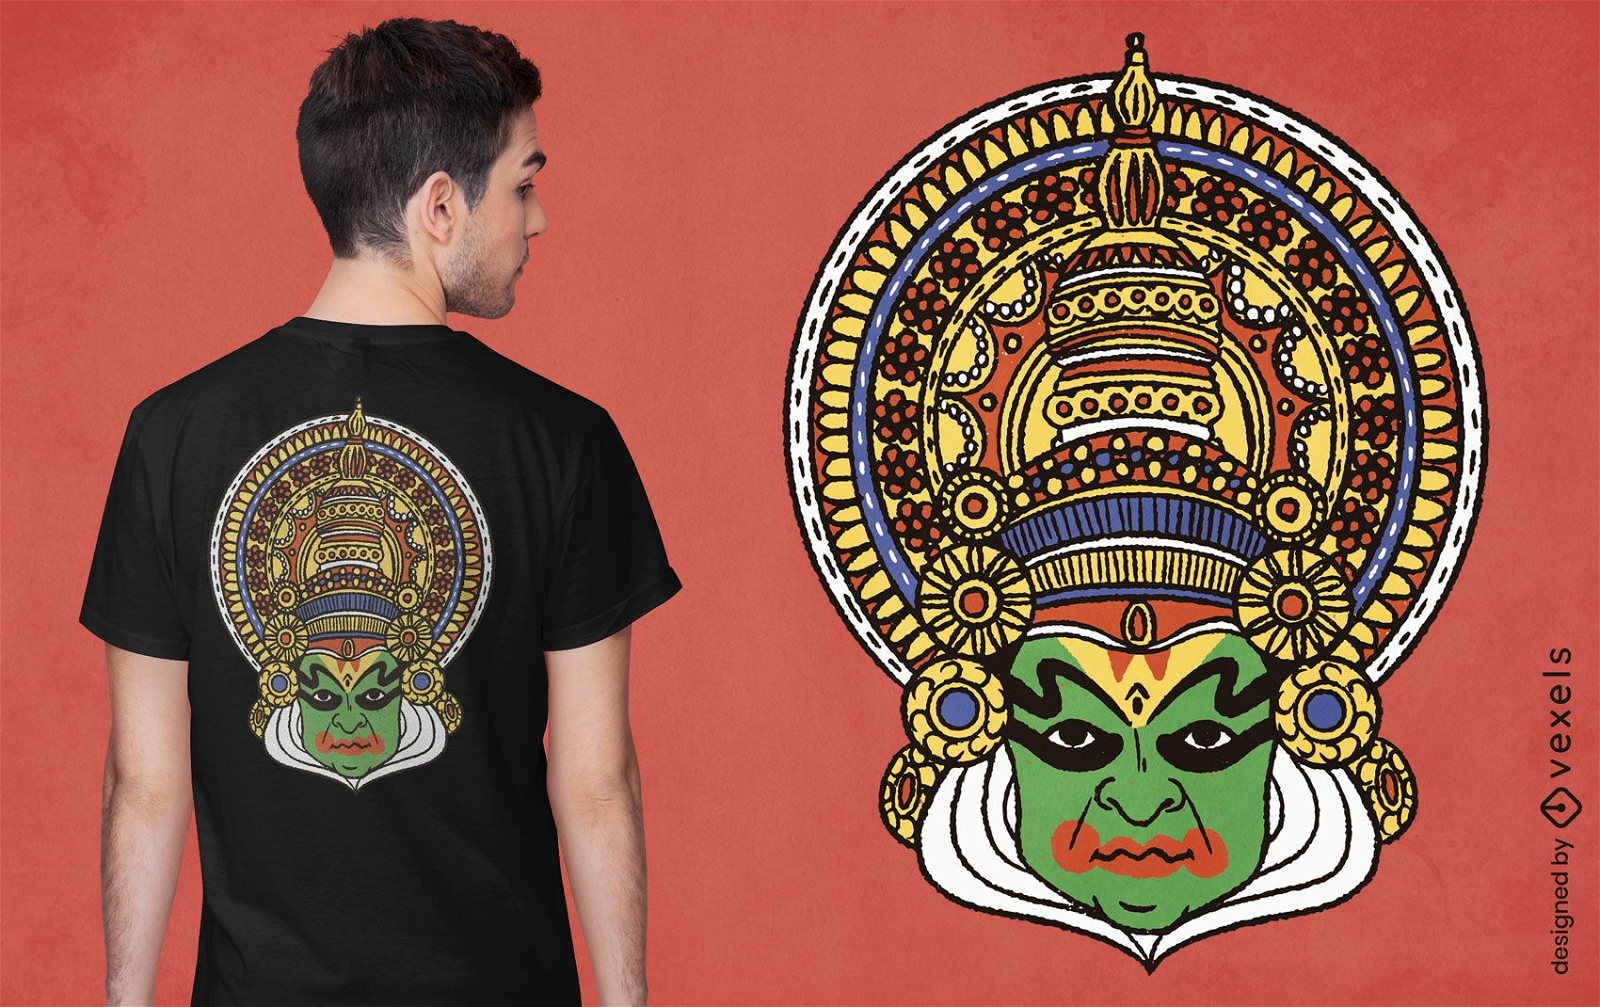 Dise?o de camiseta de decoraci?n de arte y cultura de Kerala.